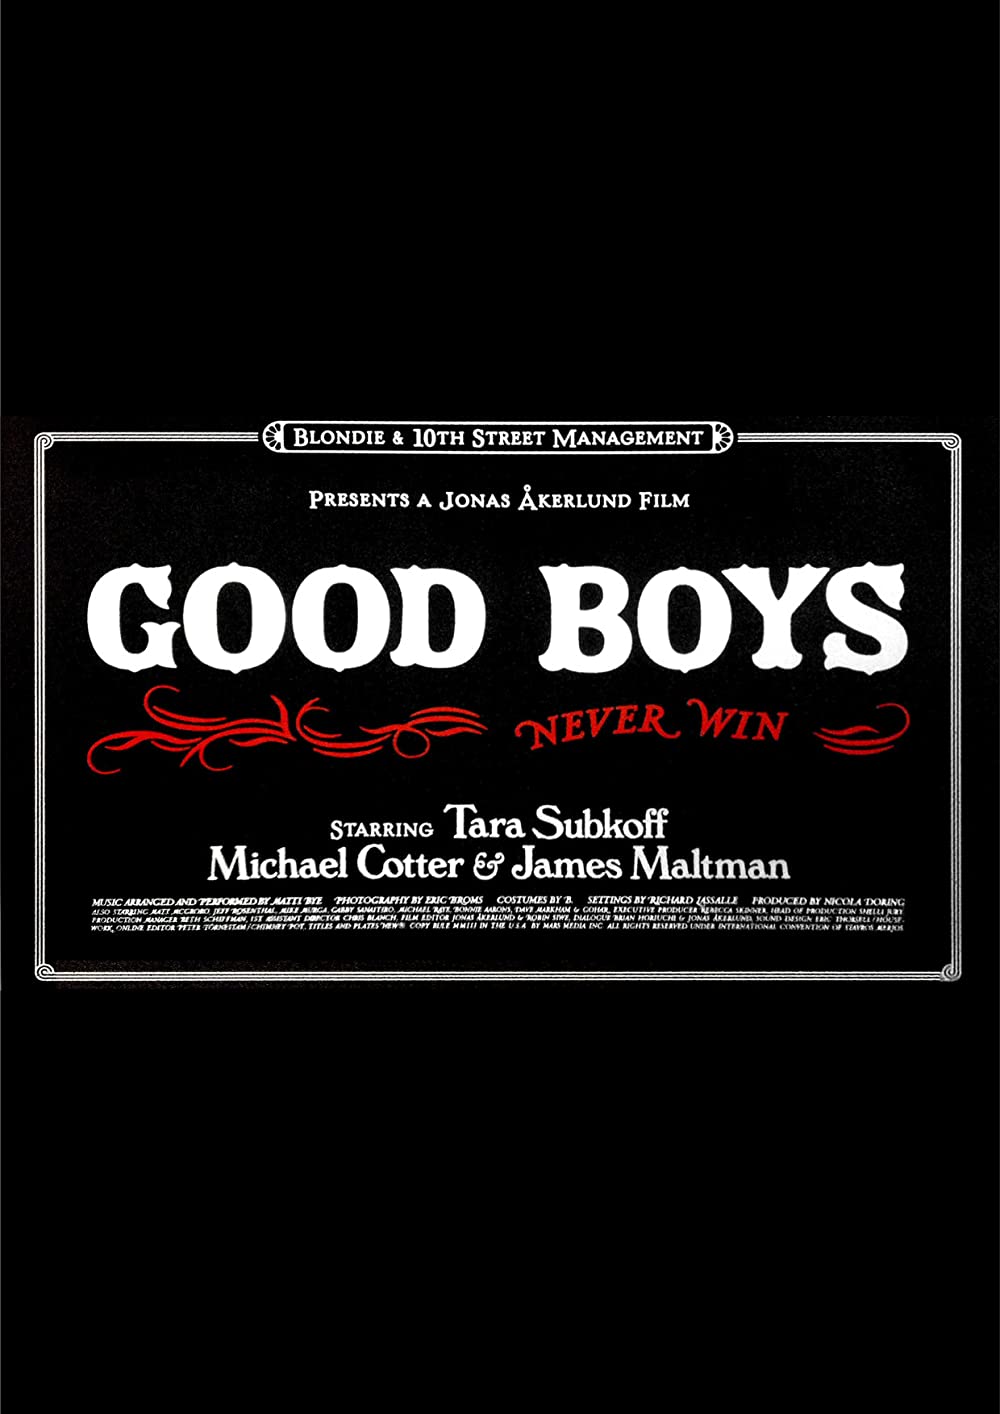 Filmbeschreibung zu Good Boys (2004)